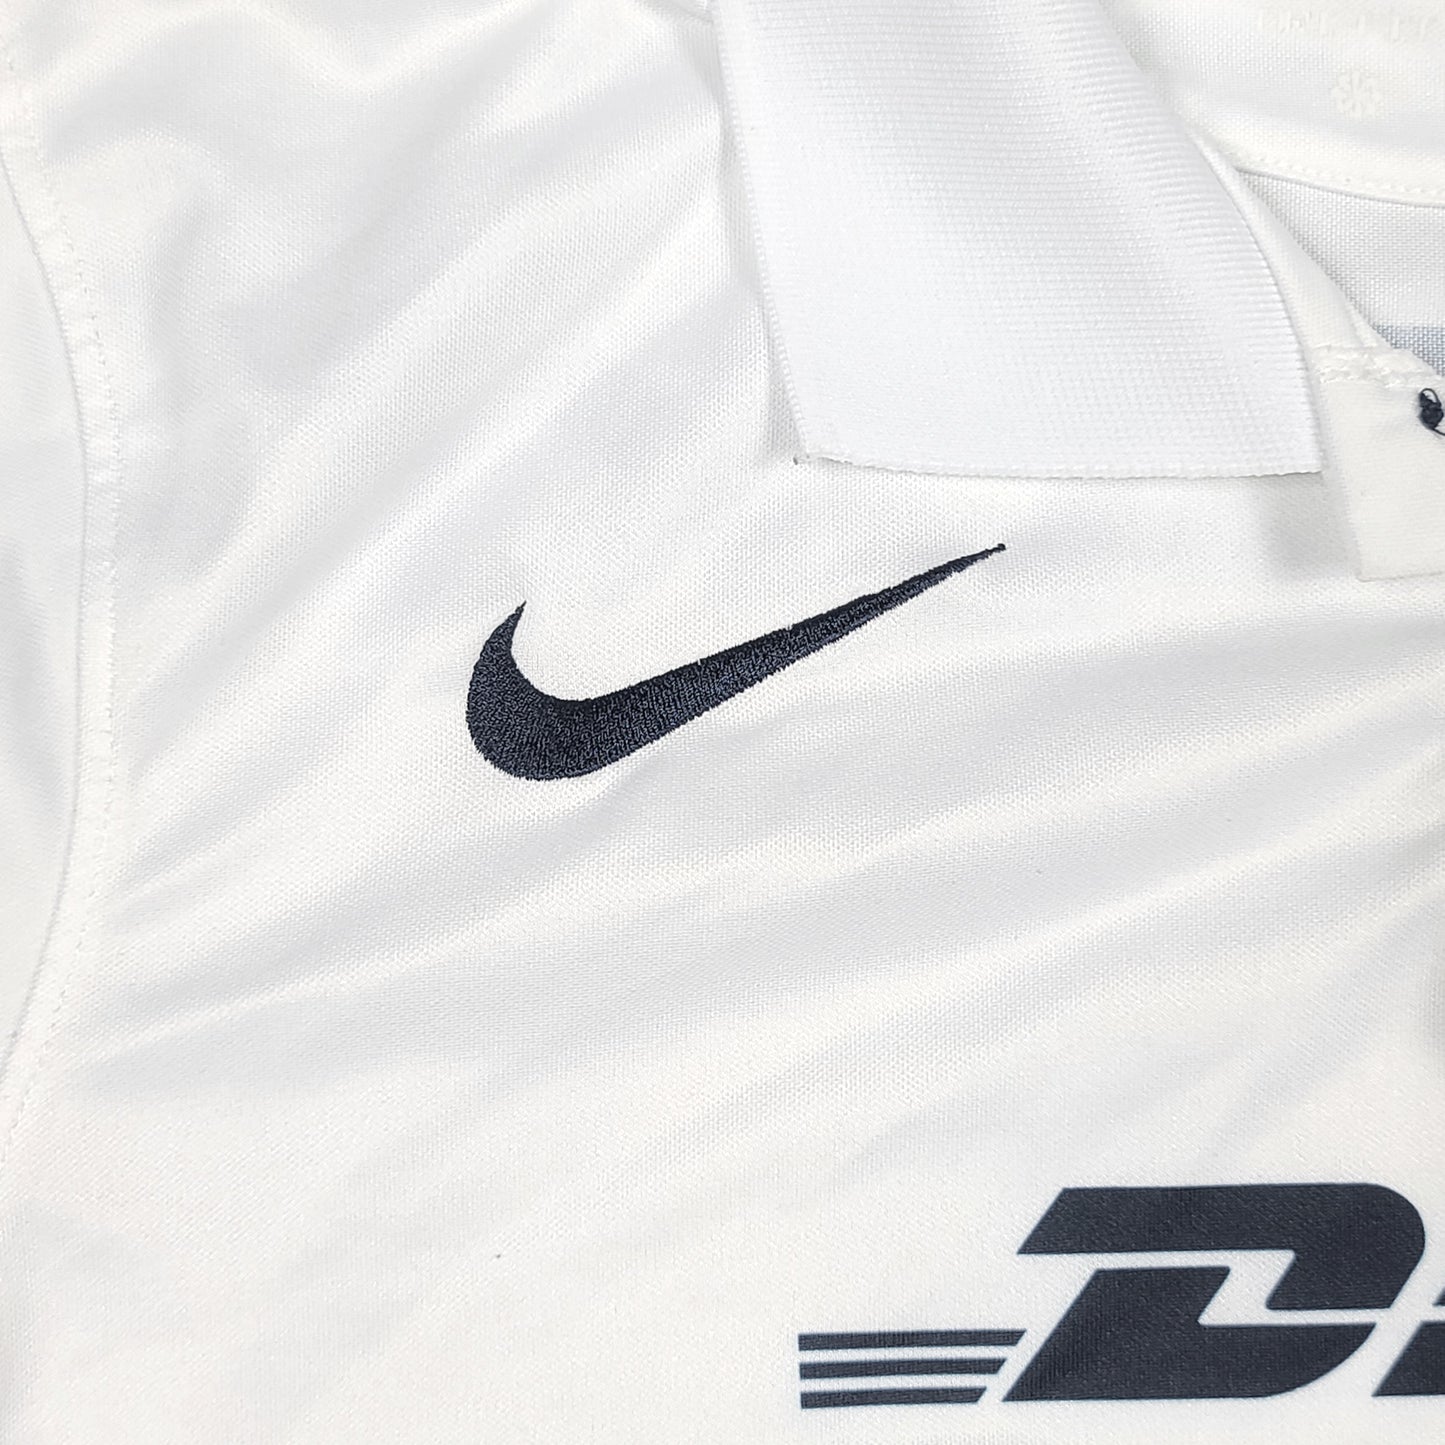 Pumas 2021-22 Nike Home Soccer Jersey